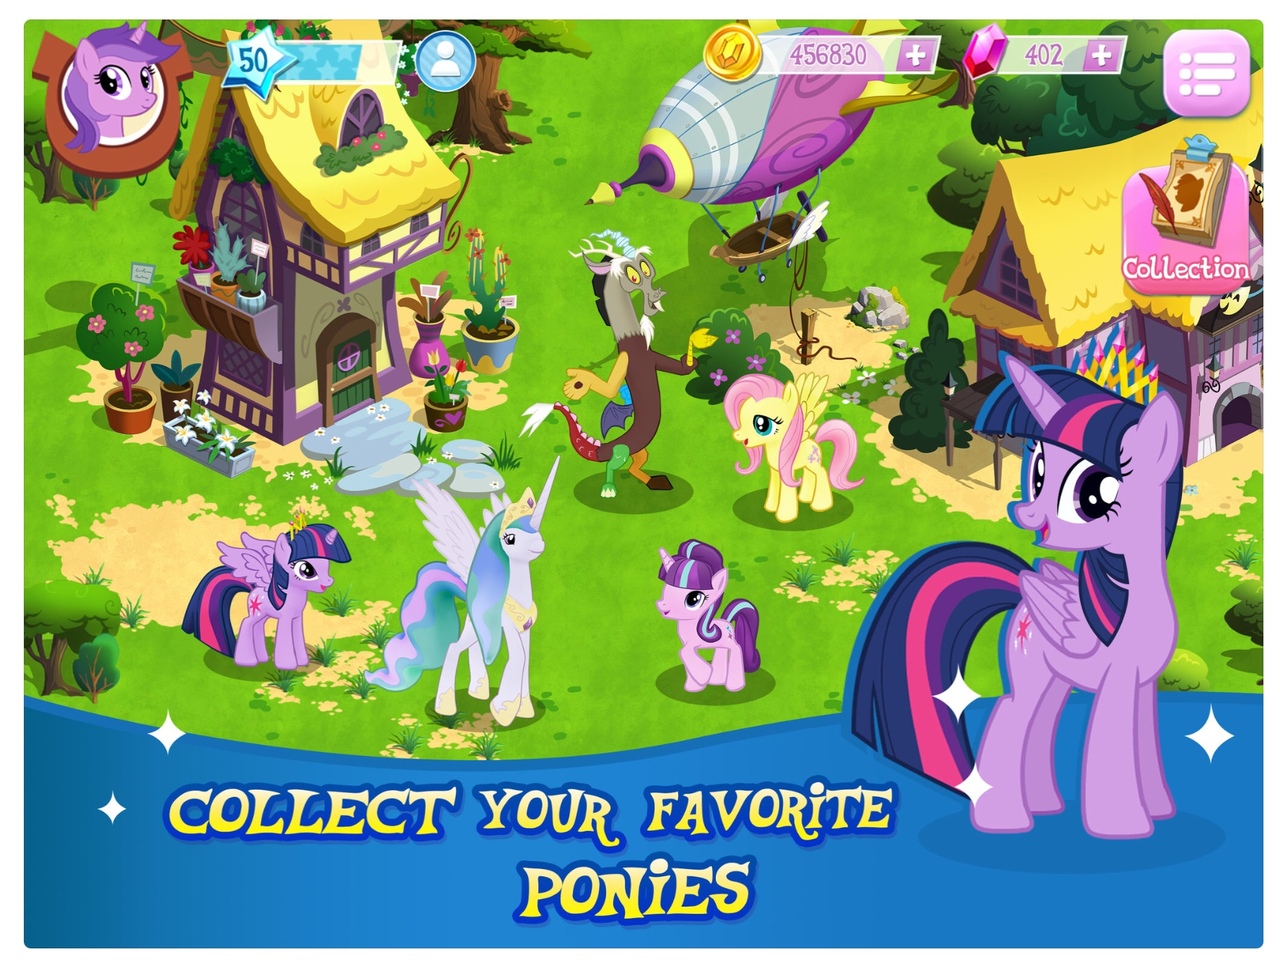 Скачай игру my little pony. My little Pony магия принцесс Понивилль. My little Pony Friendship is Magic игра. My little Pony магия принцесс игра. Игра my little Pony Gameloft.